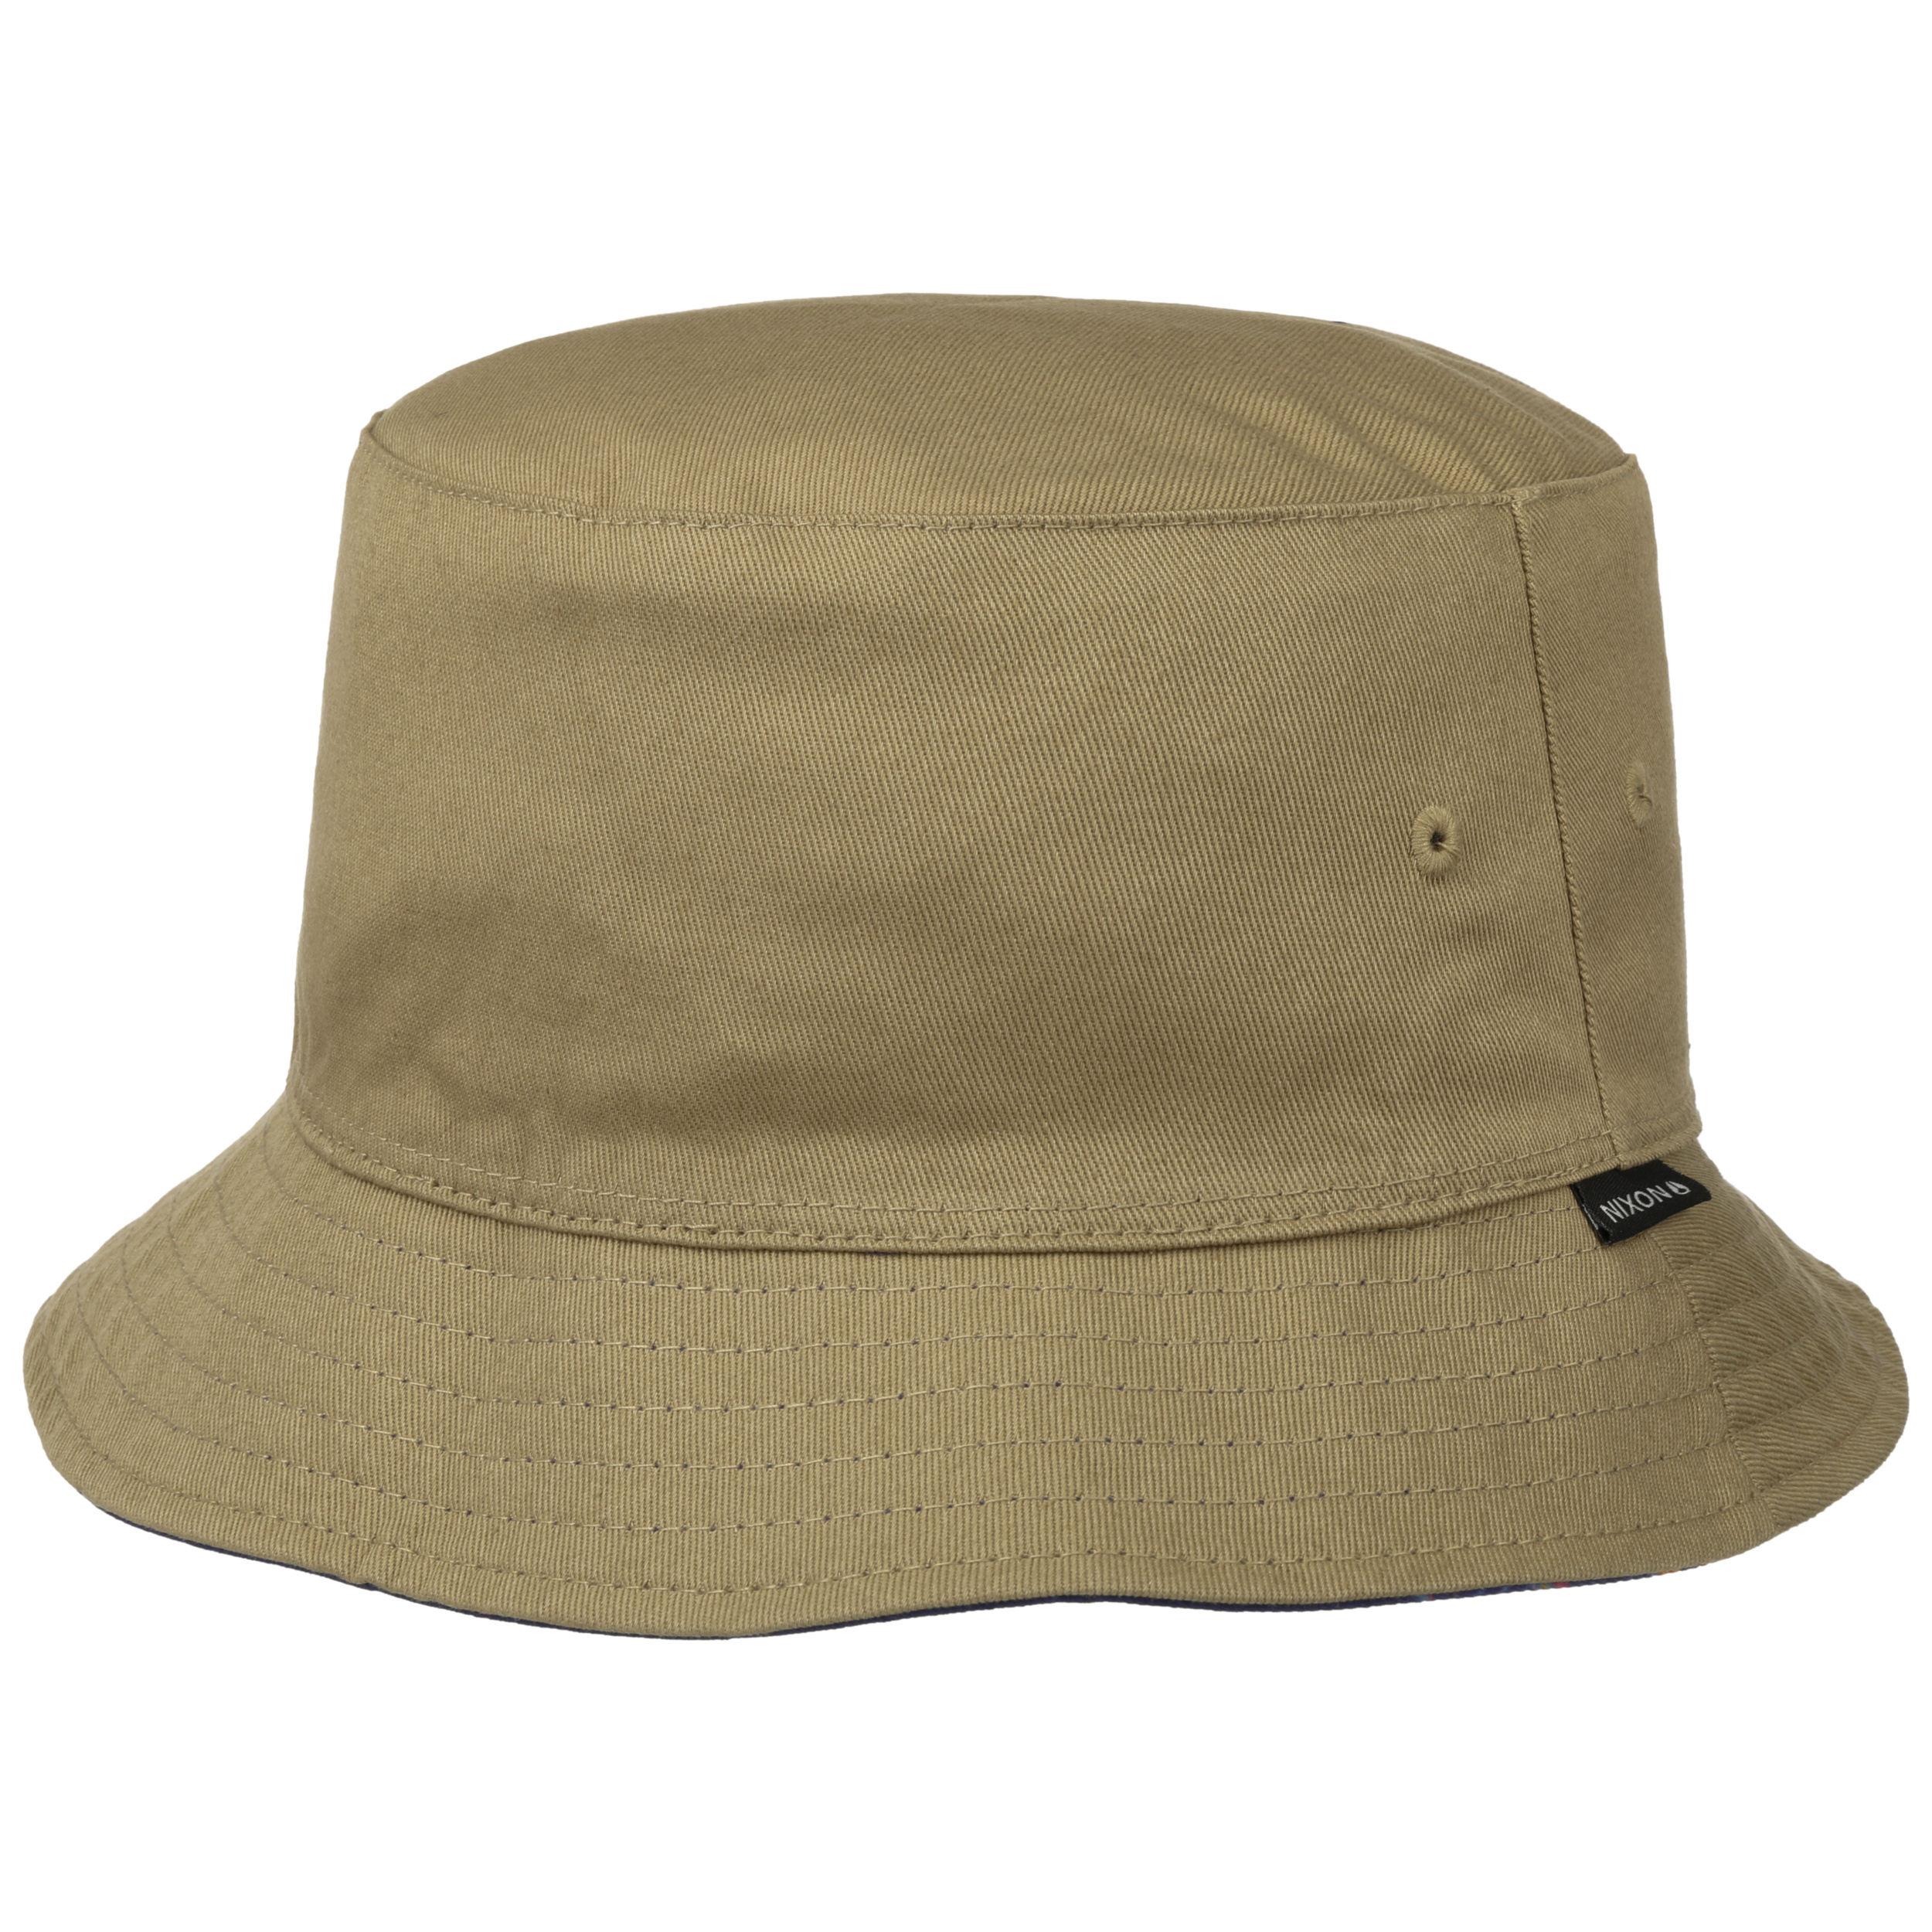 Fishing Hat Classic by Lipodo - 19,95 €